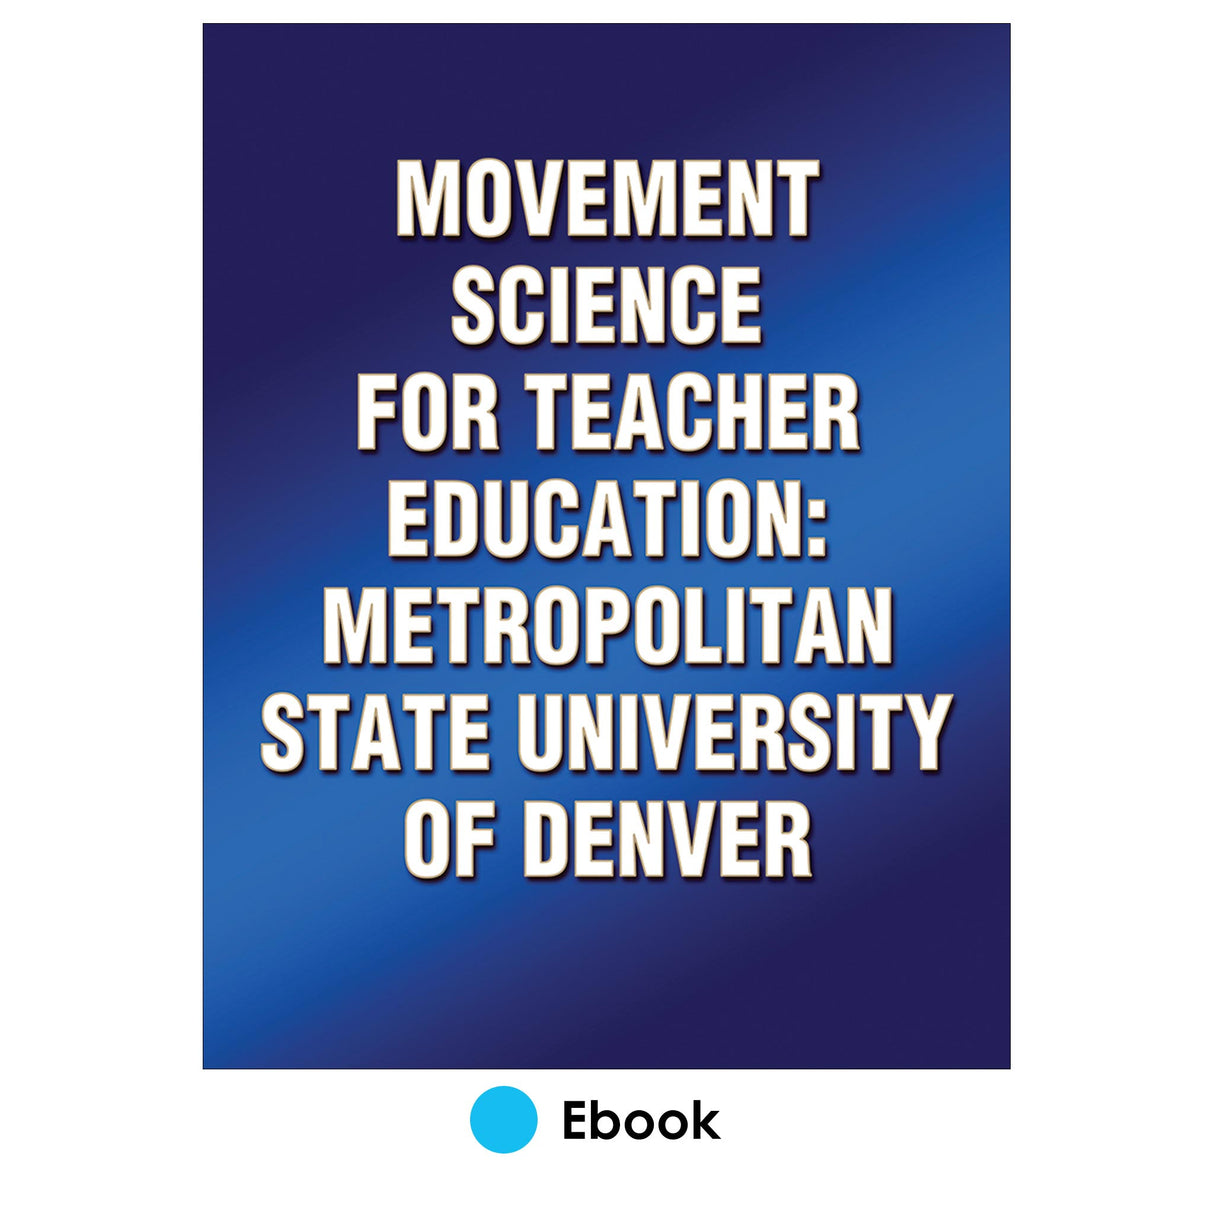 Movement Science for Teacher Education: Metropolitan State University of Denver